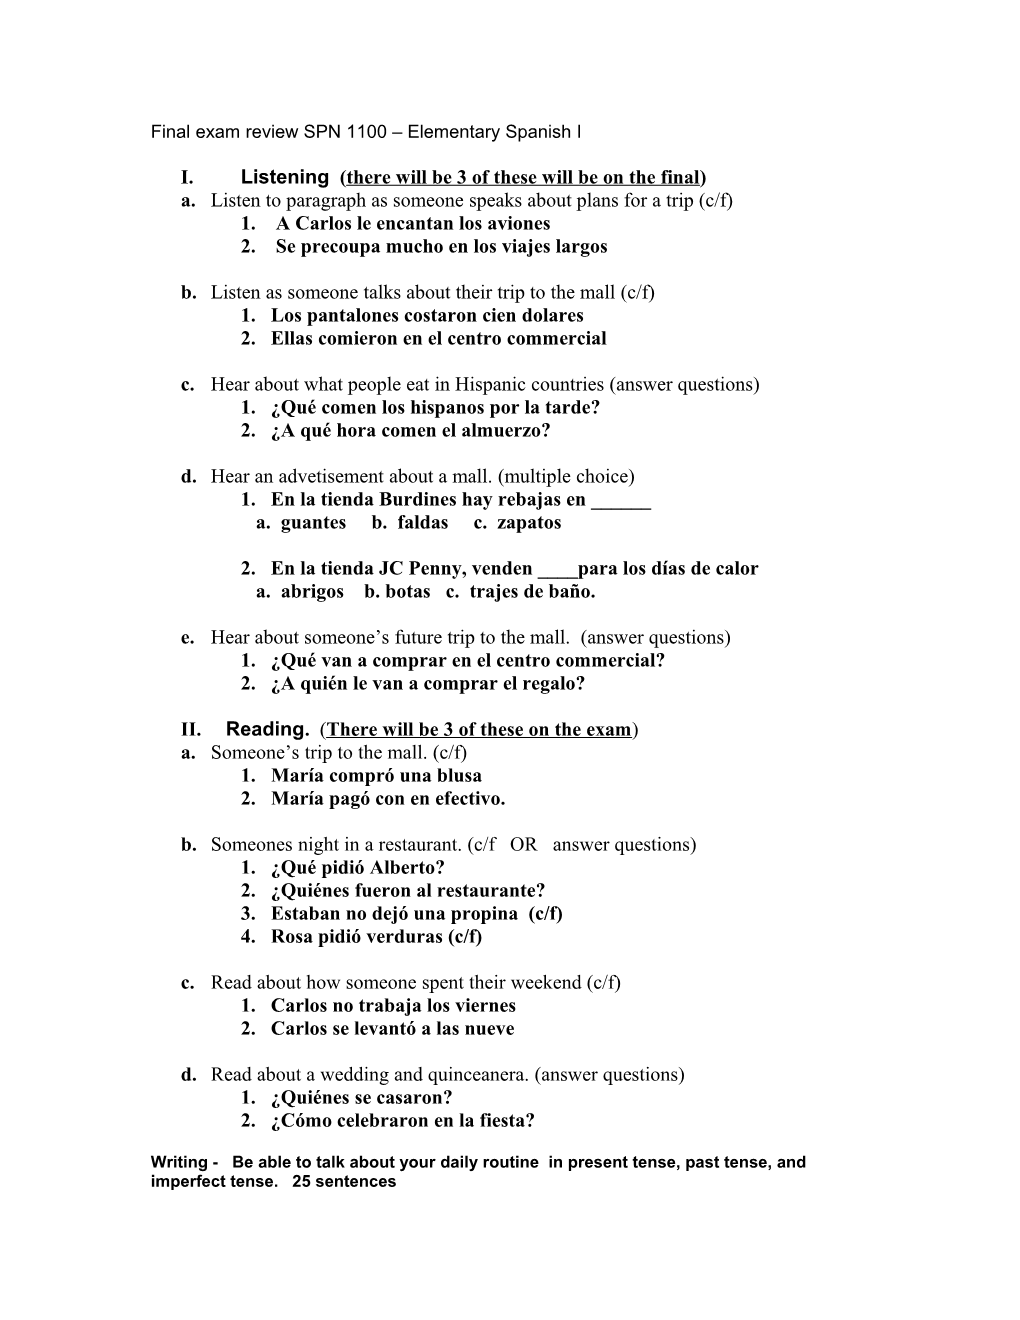 Final Exam Review SPN 1100 Elementary Spanish I